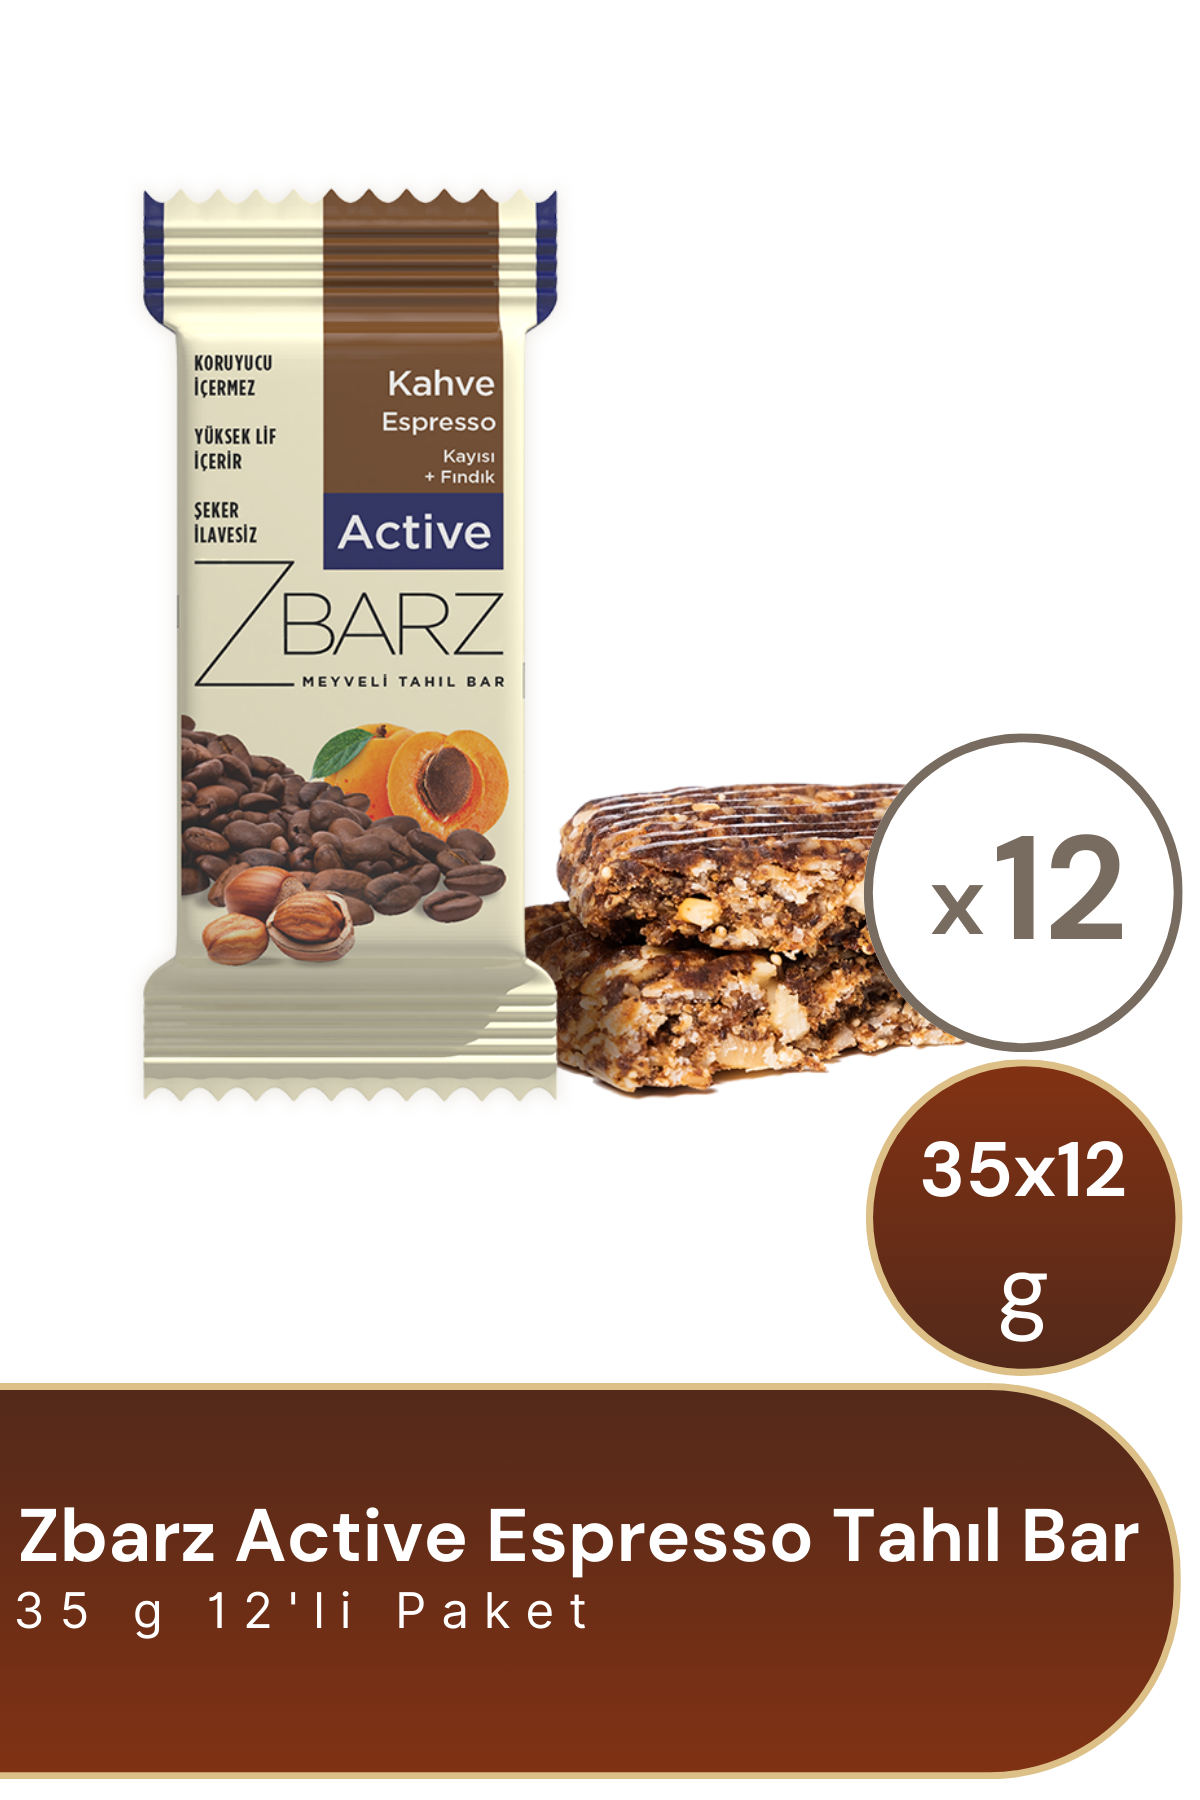 Zbarz Active Espresso Tahıl Bar 35 g 12'li Paket